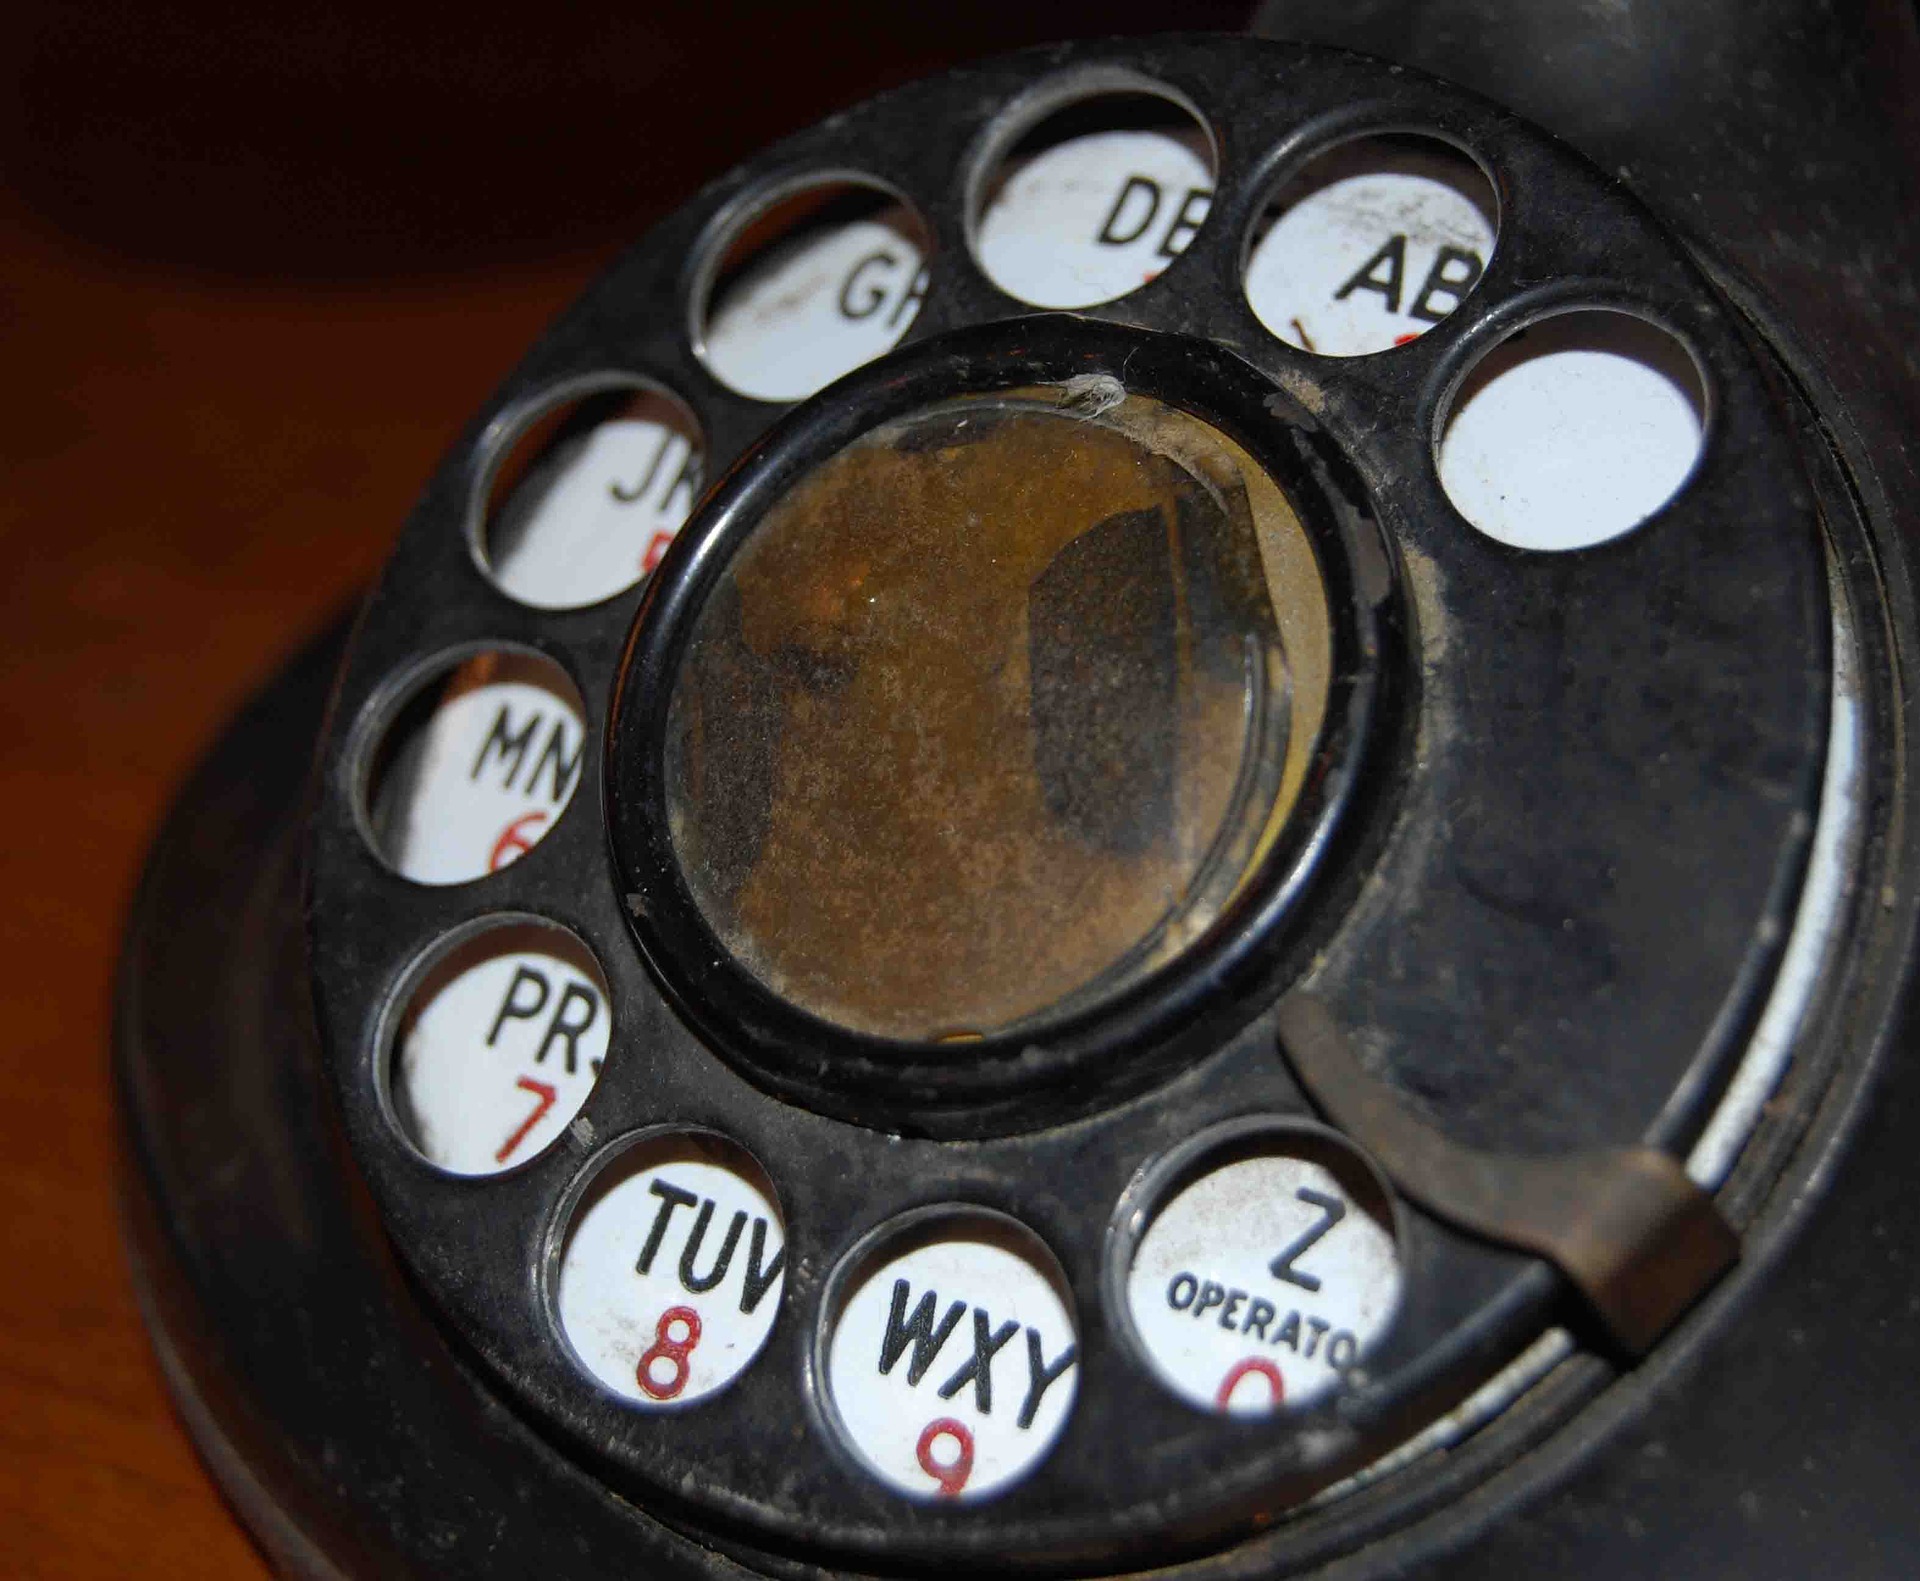 Rotary Phone Dial